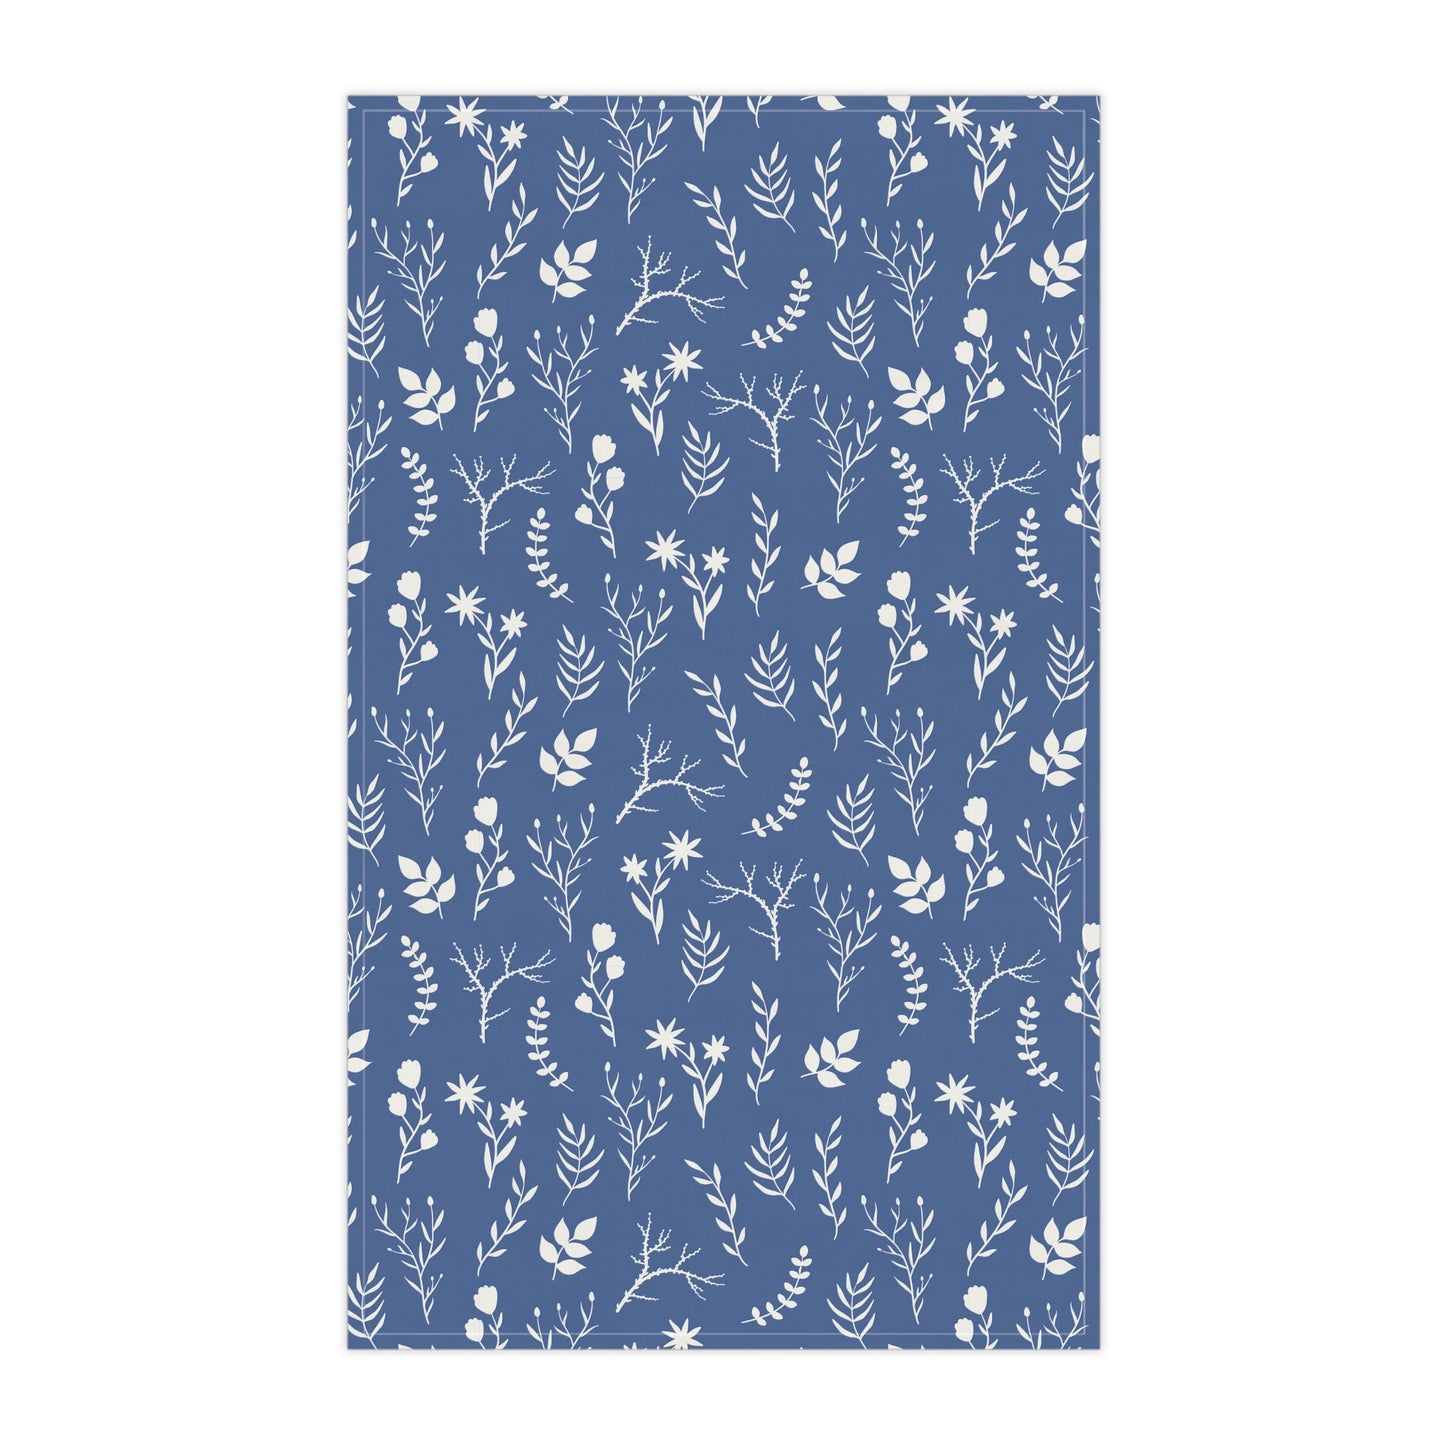 Indigo Blue and White Floral Tea Towel